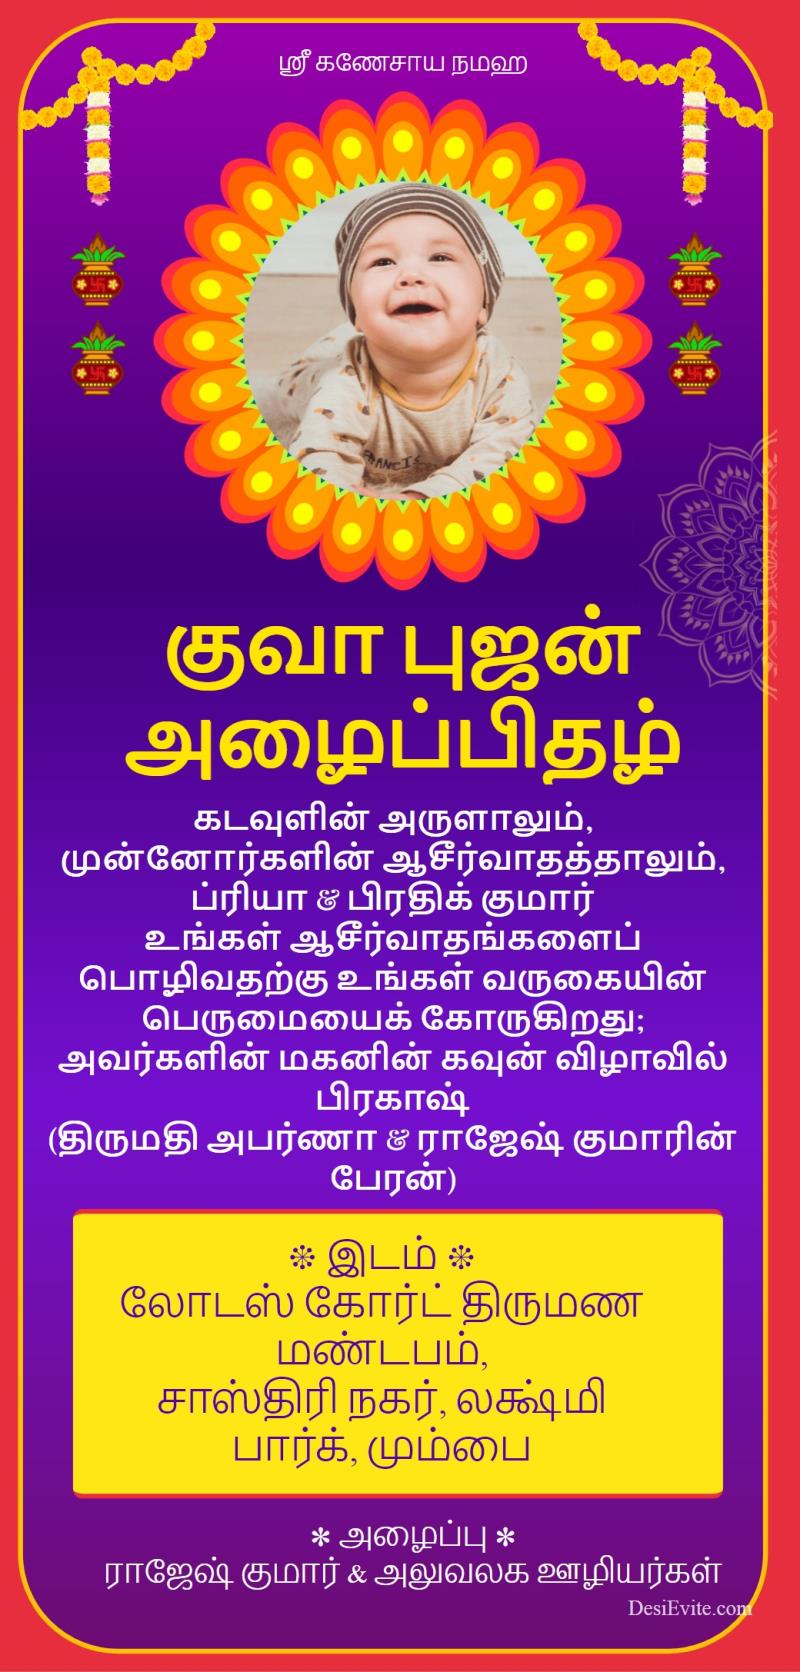 Tamil tradional kuan poojan invitation card 81